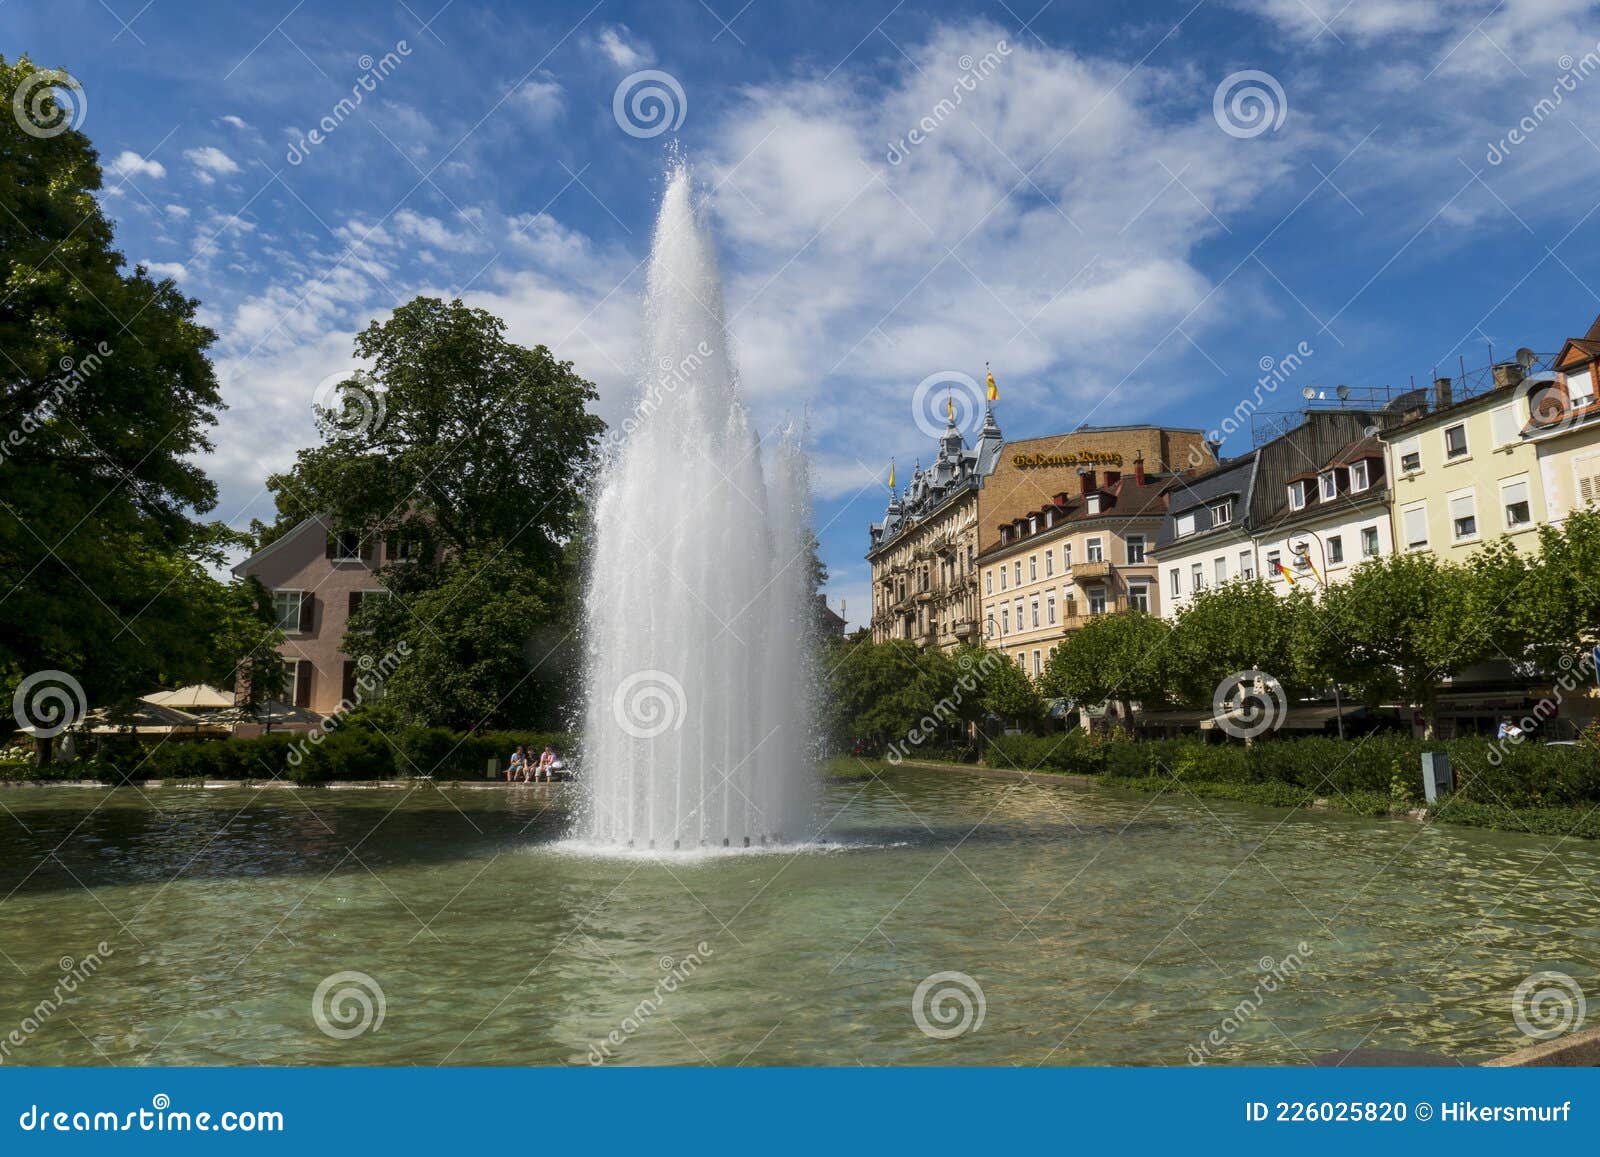 fountain in the lake at augustaplatz in baden-baden